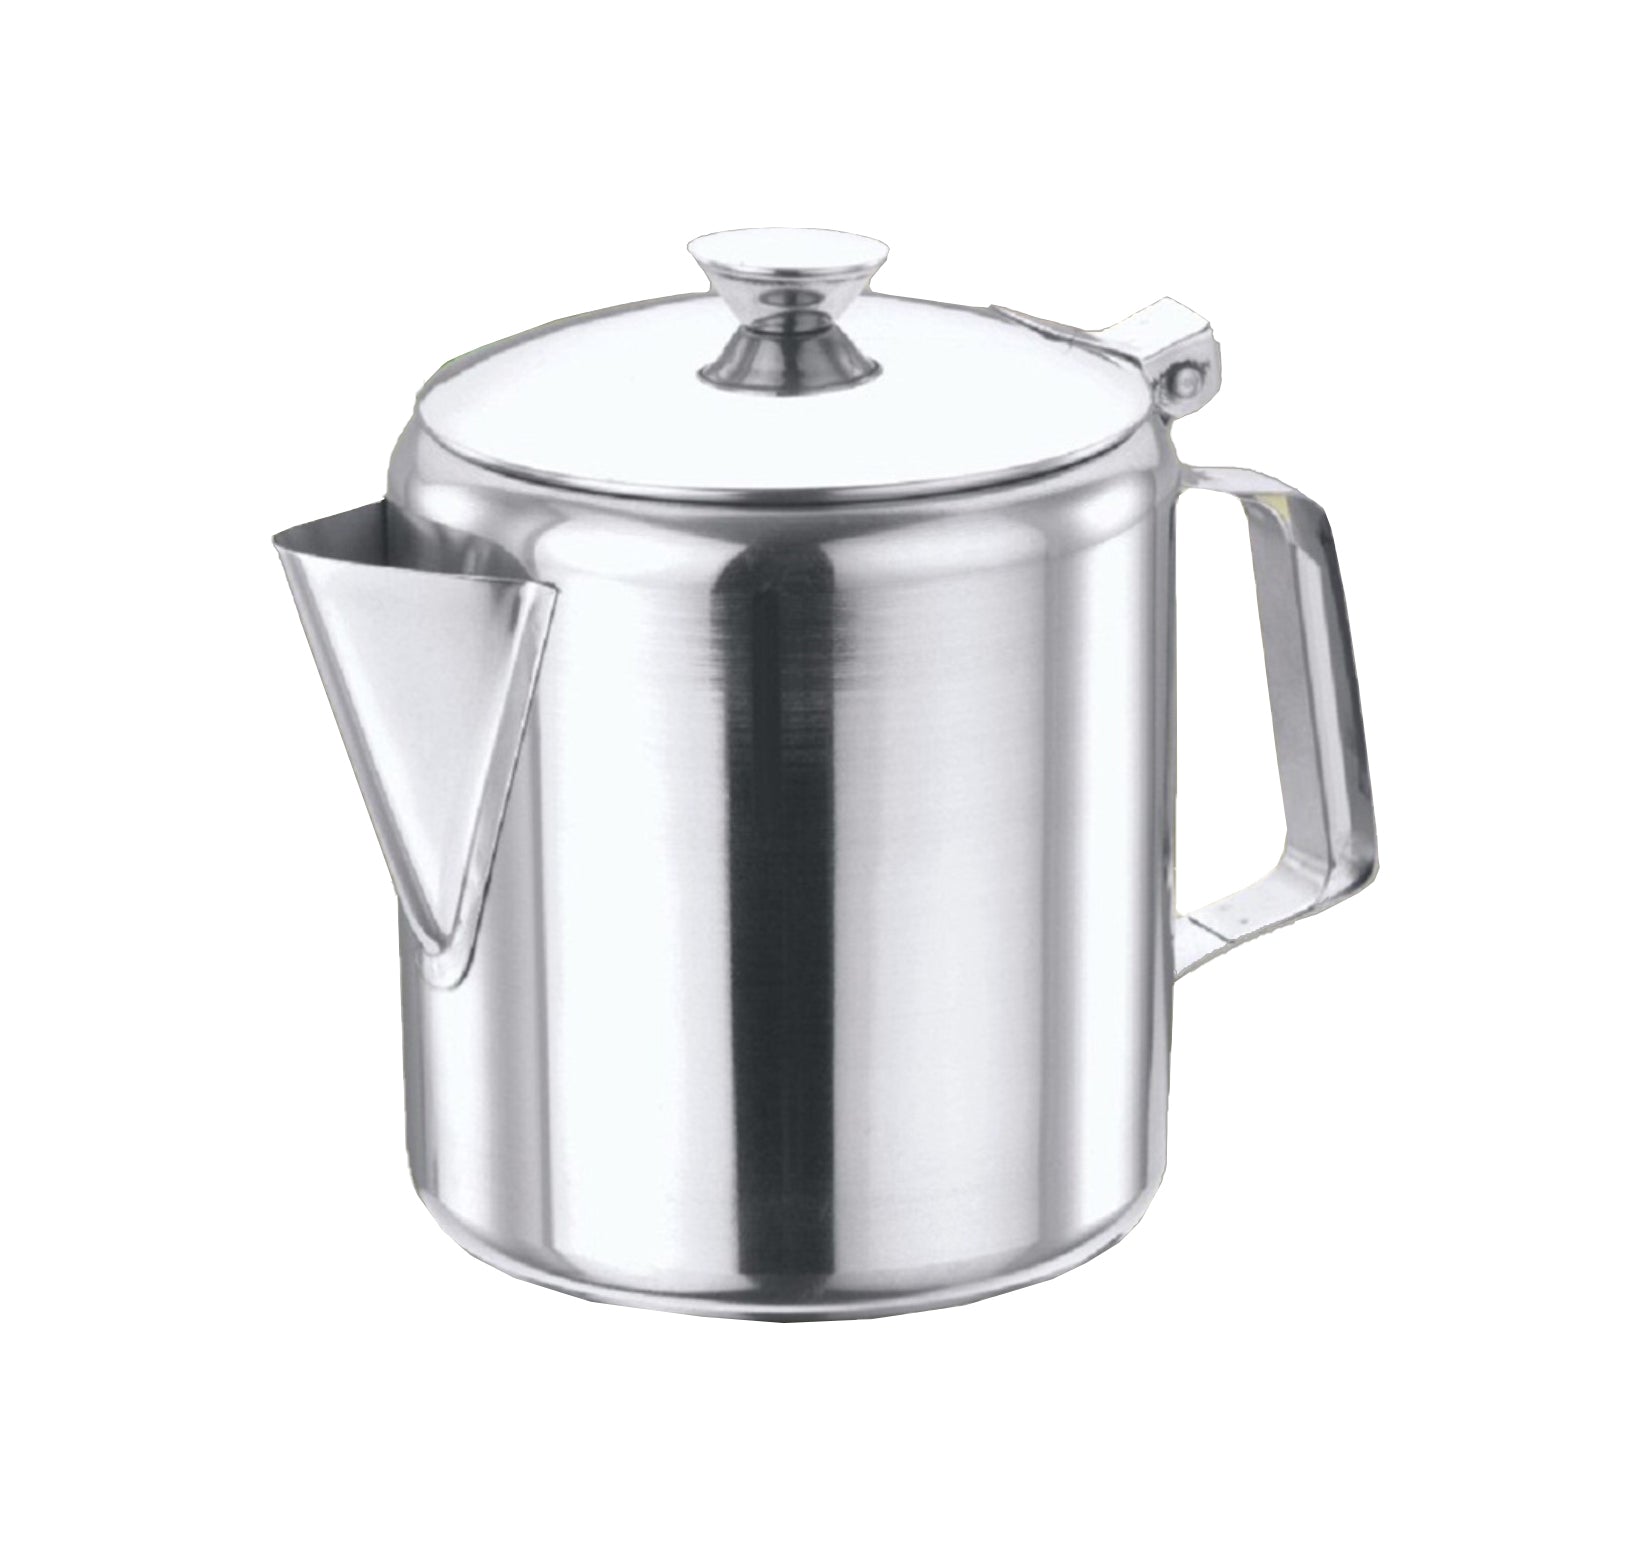 Vinod Stainless Steel Tea/Coffee Pot - 1.5Ltr